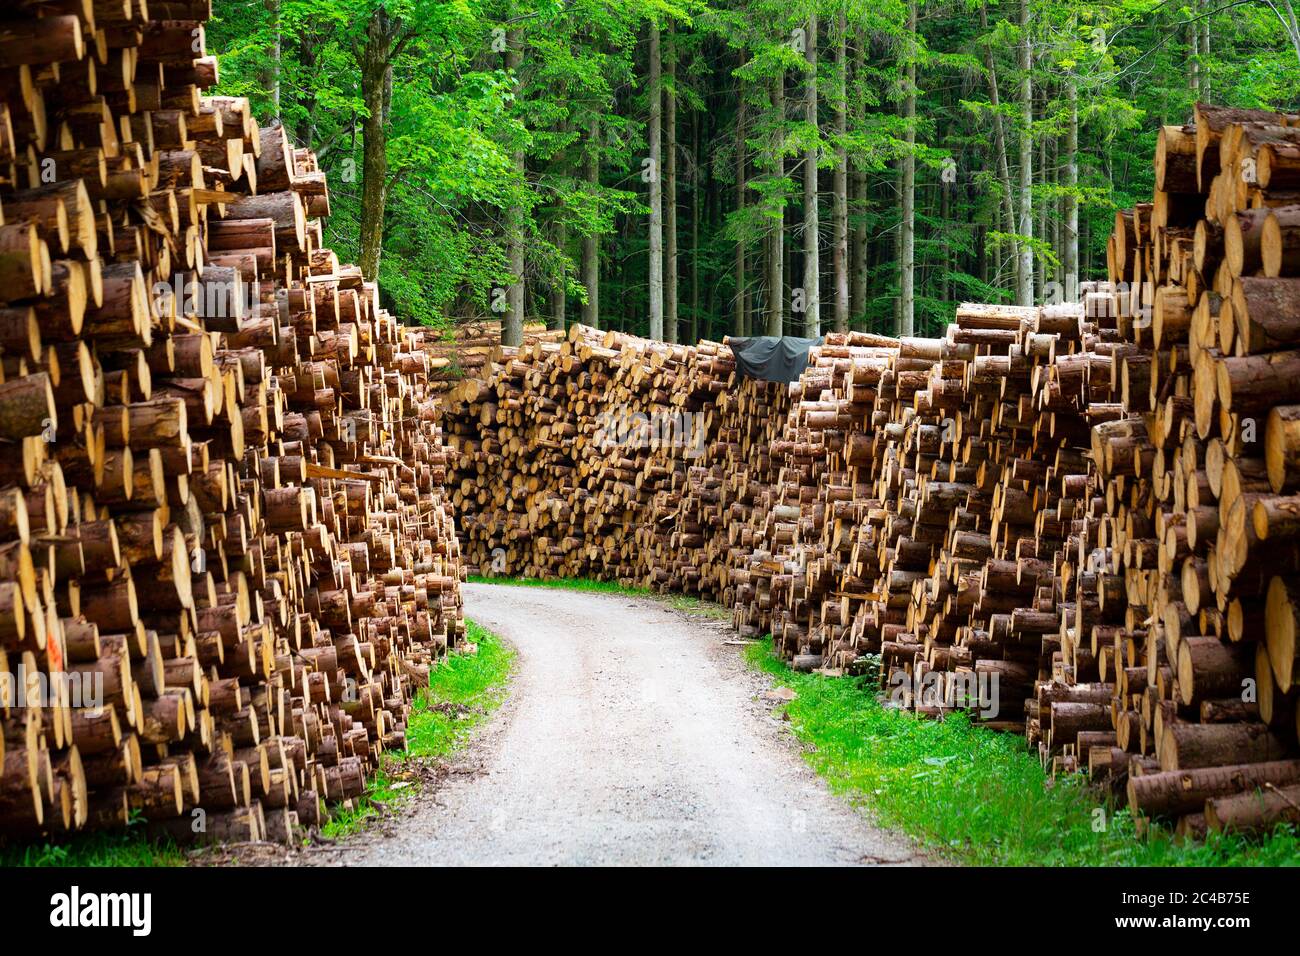 Grandes pilas de madera a lo largo de una carretera forestal, troncos apilados, Mondseeland, Salzkammergut, Alta Austria, Austria Foto de stock